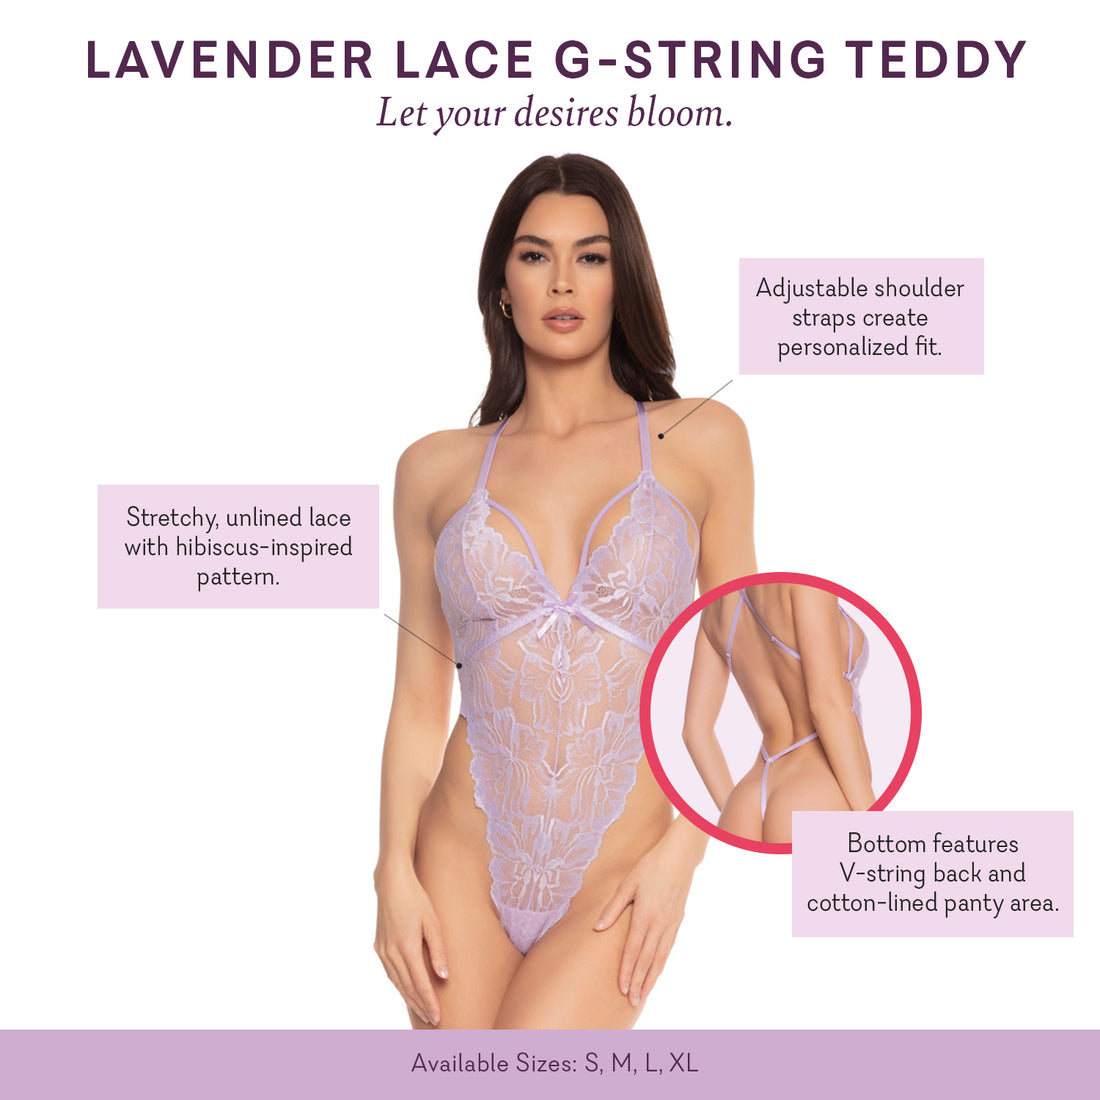 Lavender Lace G-string Teddy